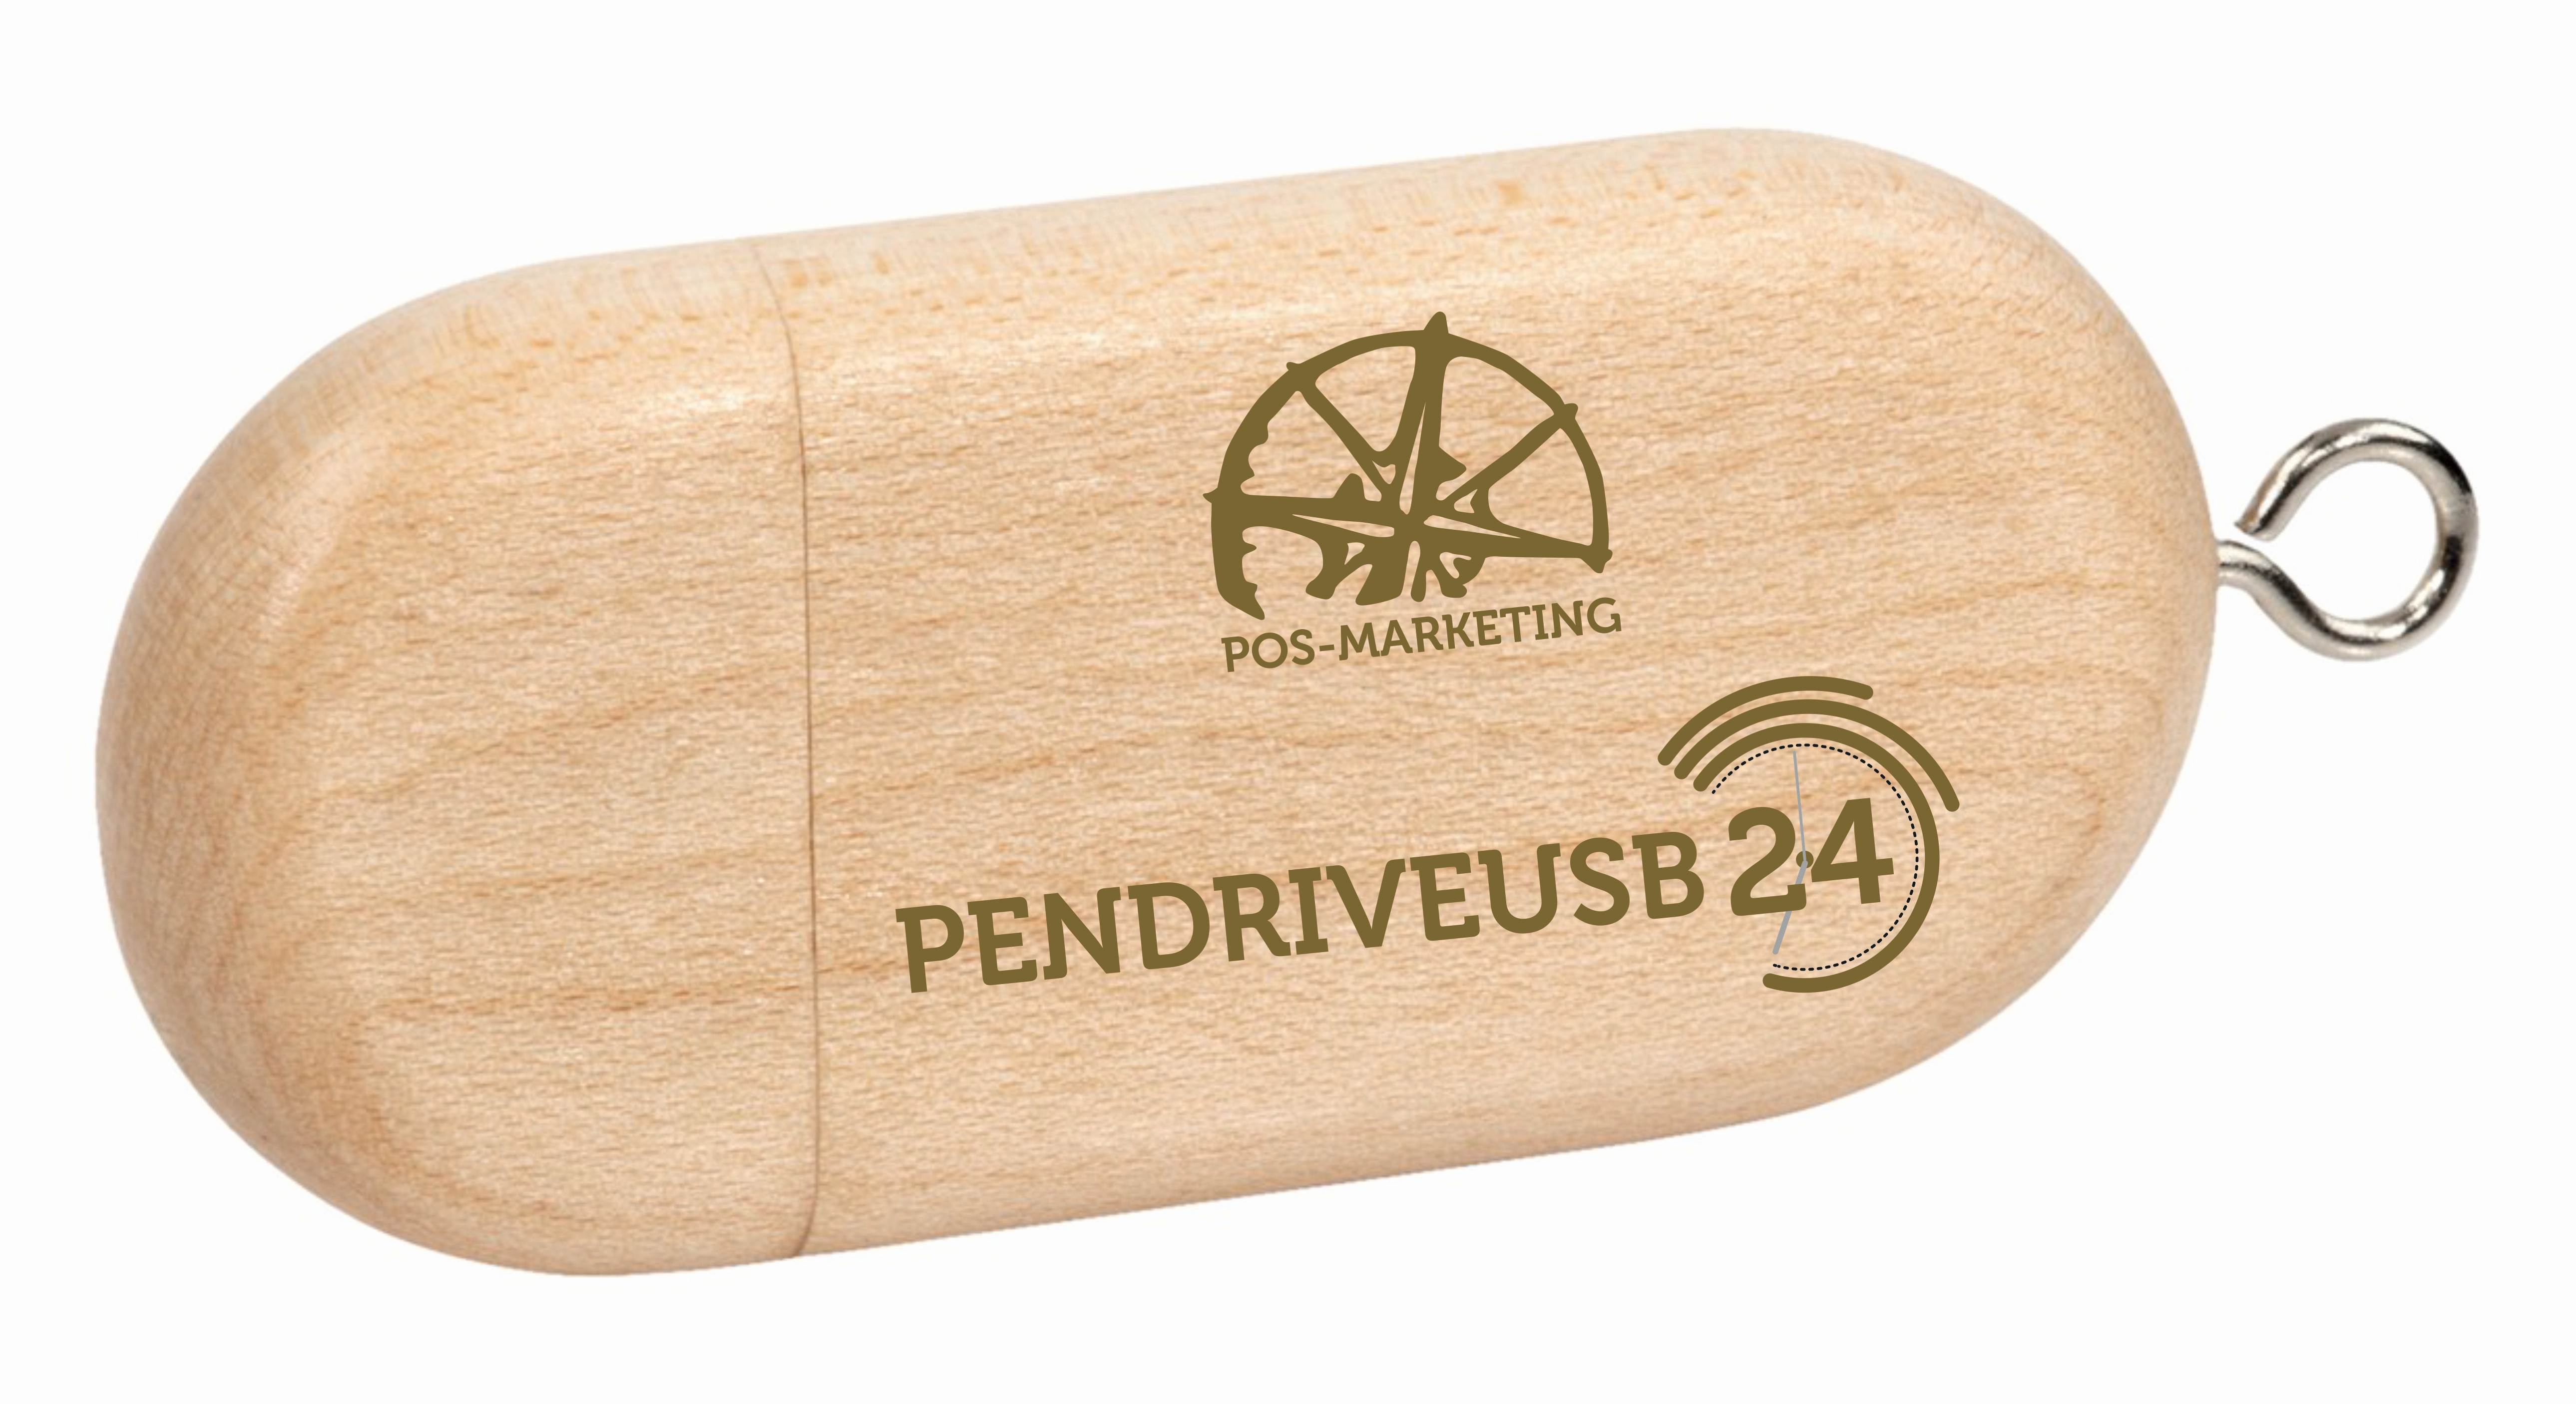 PDw-4 pendriveusb24